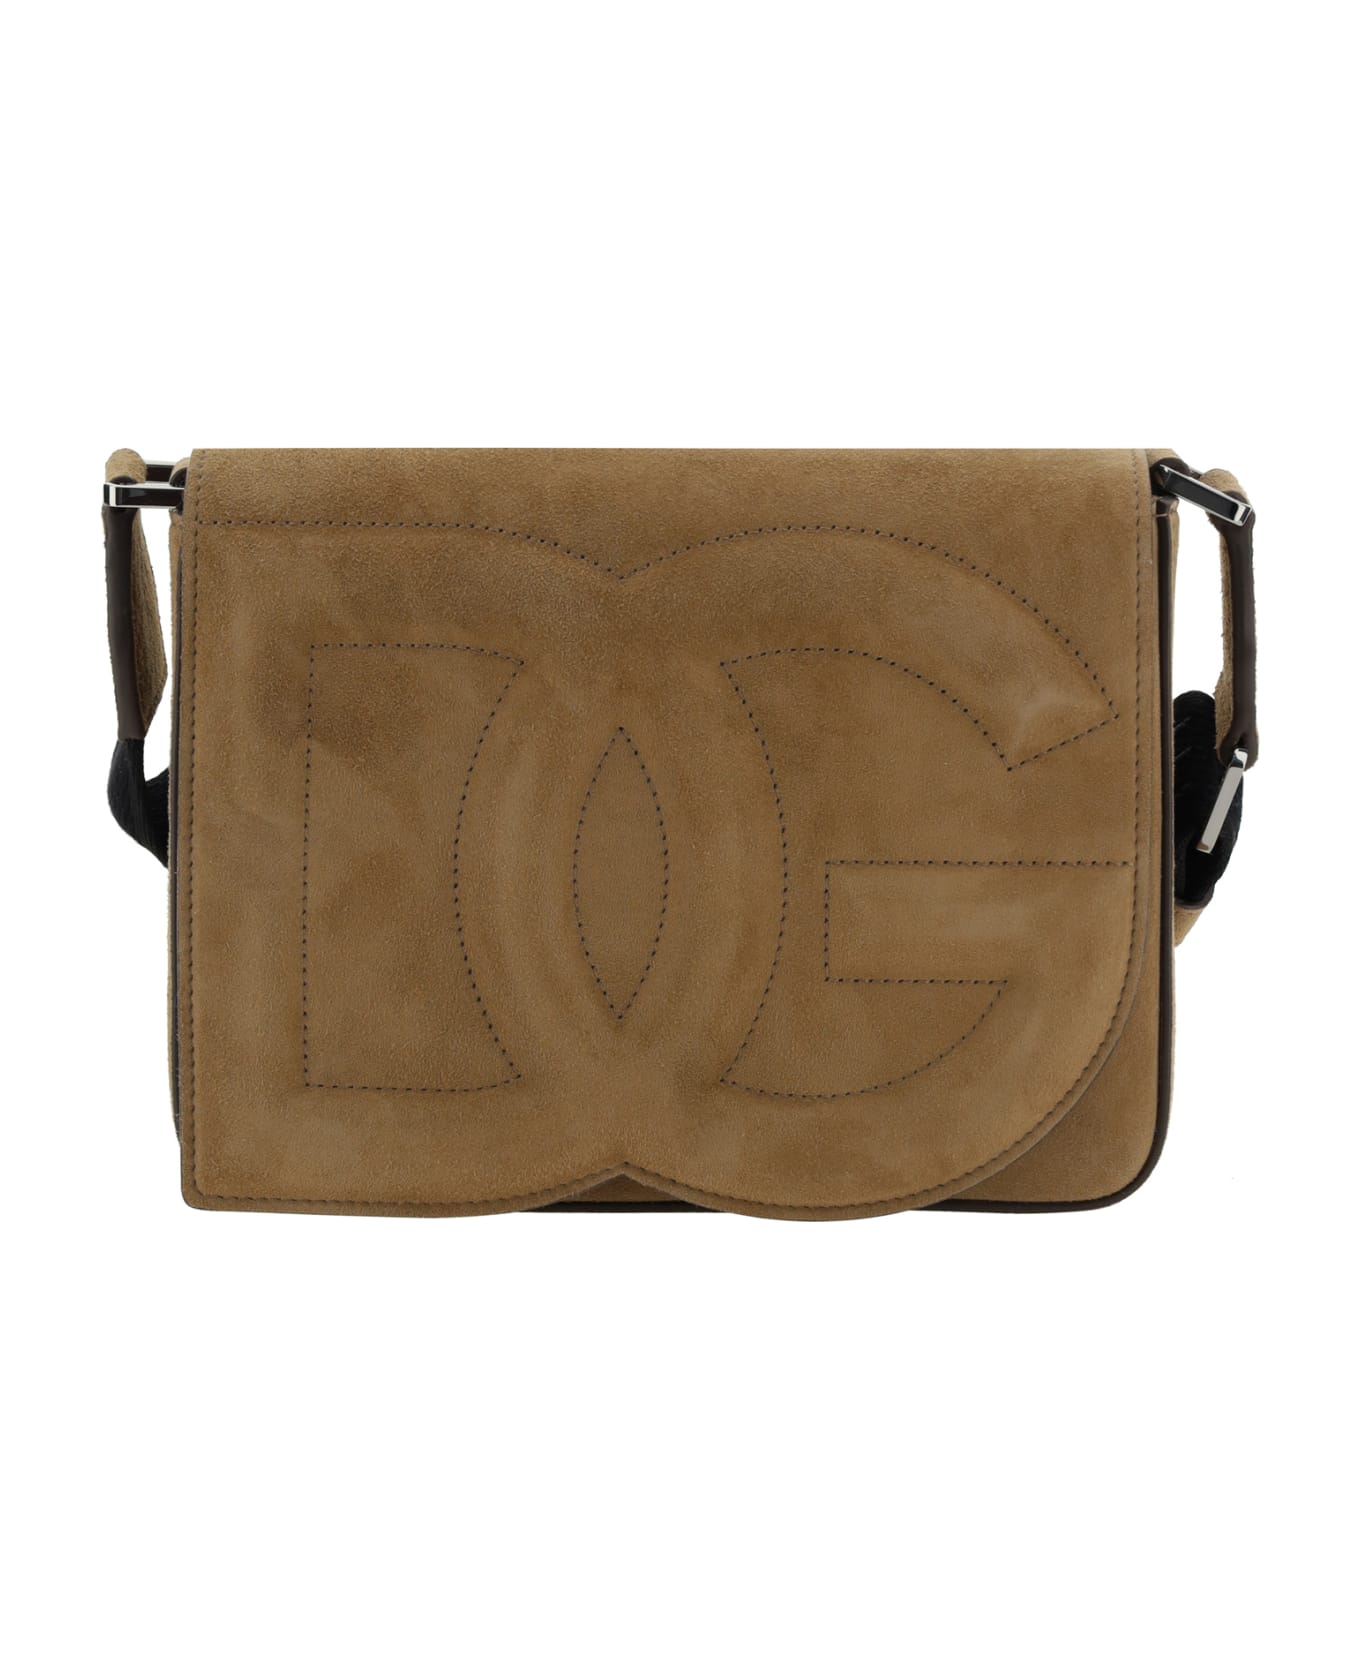 Dolce & Gabbana Shoulder Bags - Nocciola ショルダーバッグ